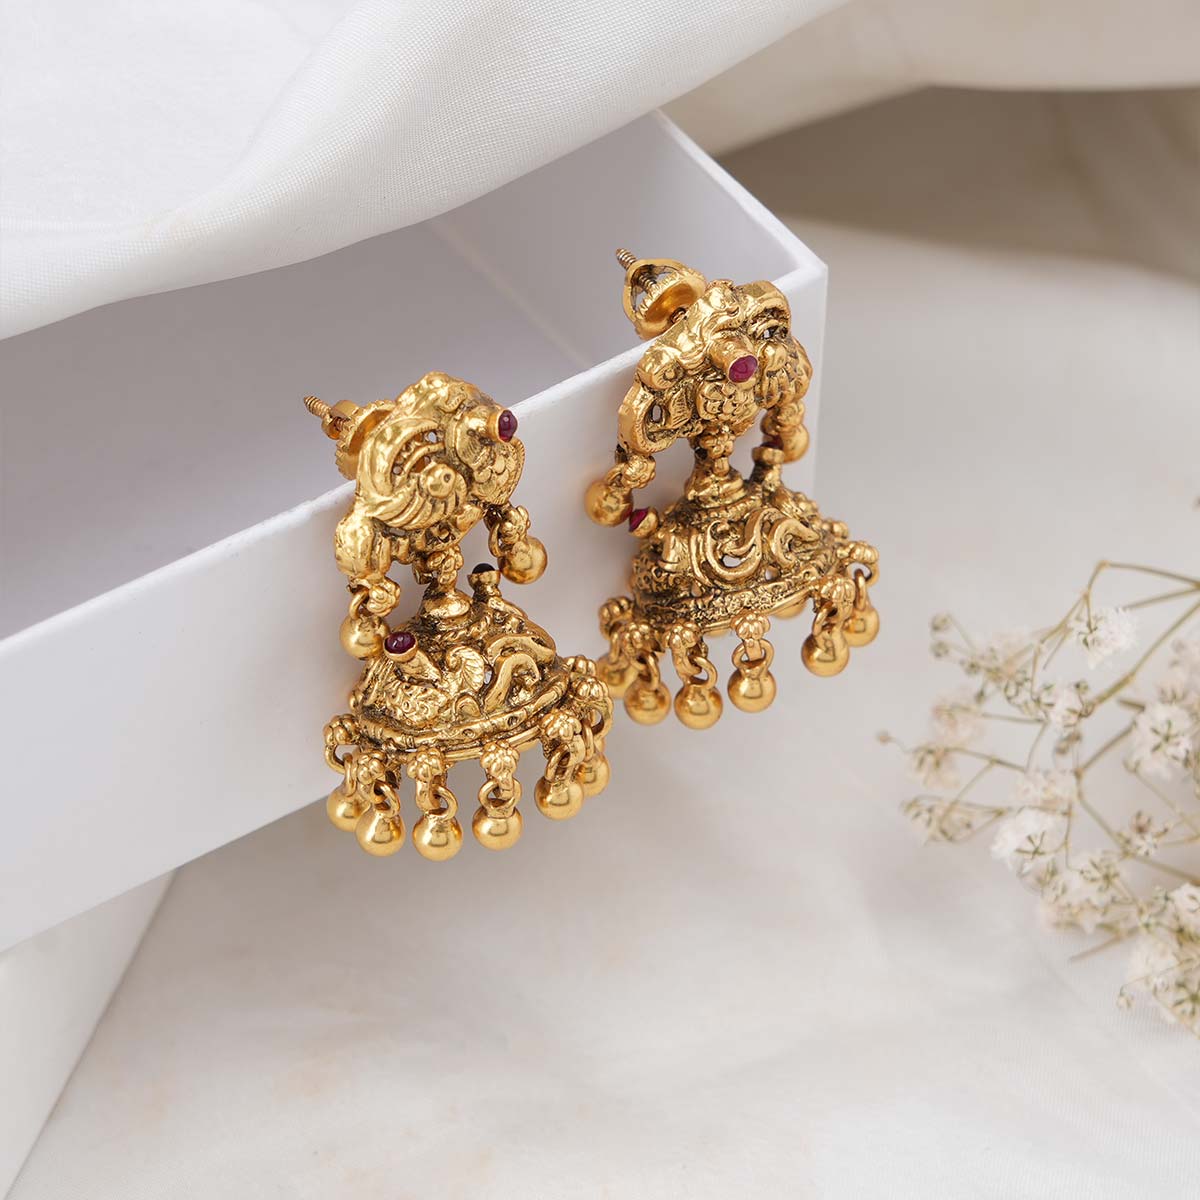 Buy Gold Drop Earrings Online - Drop Earring Design with Price